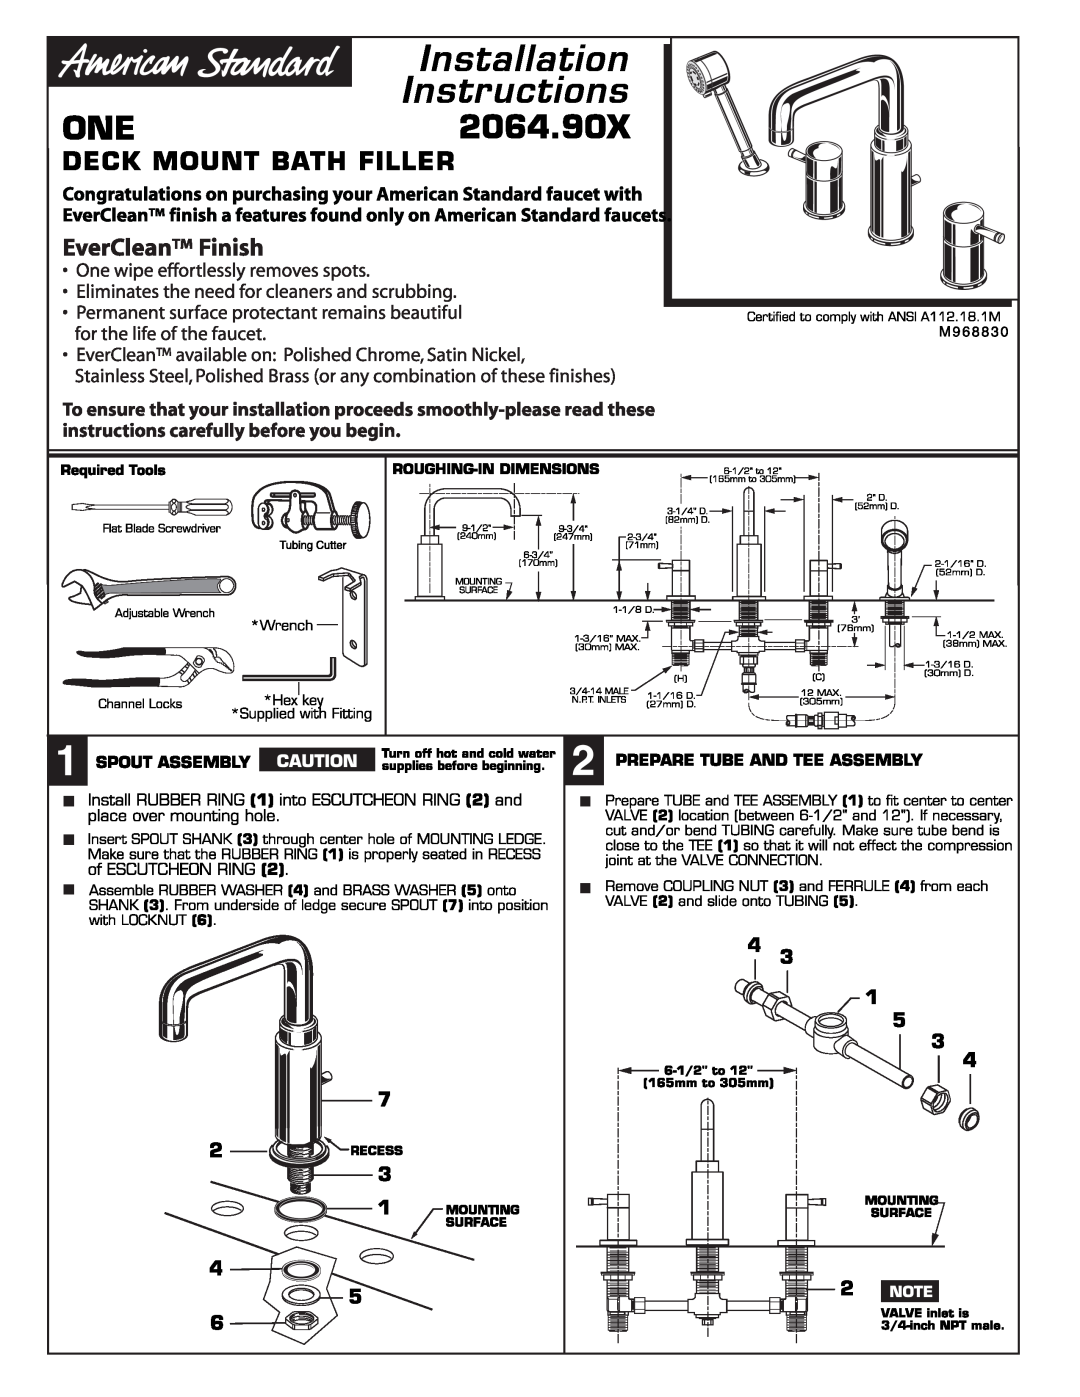 American Standard installation instructions SERIN2064.90X, Deck Mount Bath Filler, Spout Assembly 